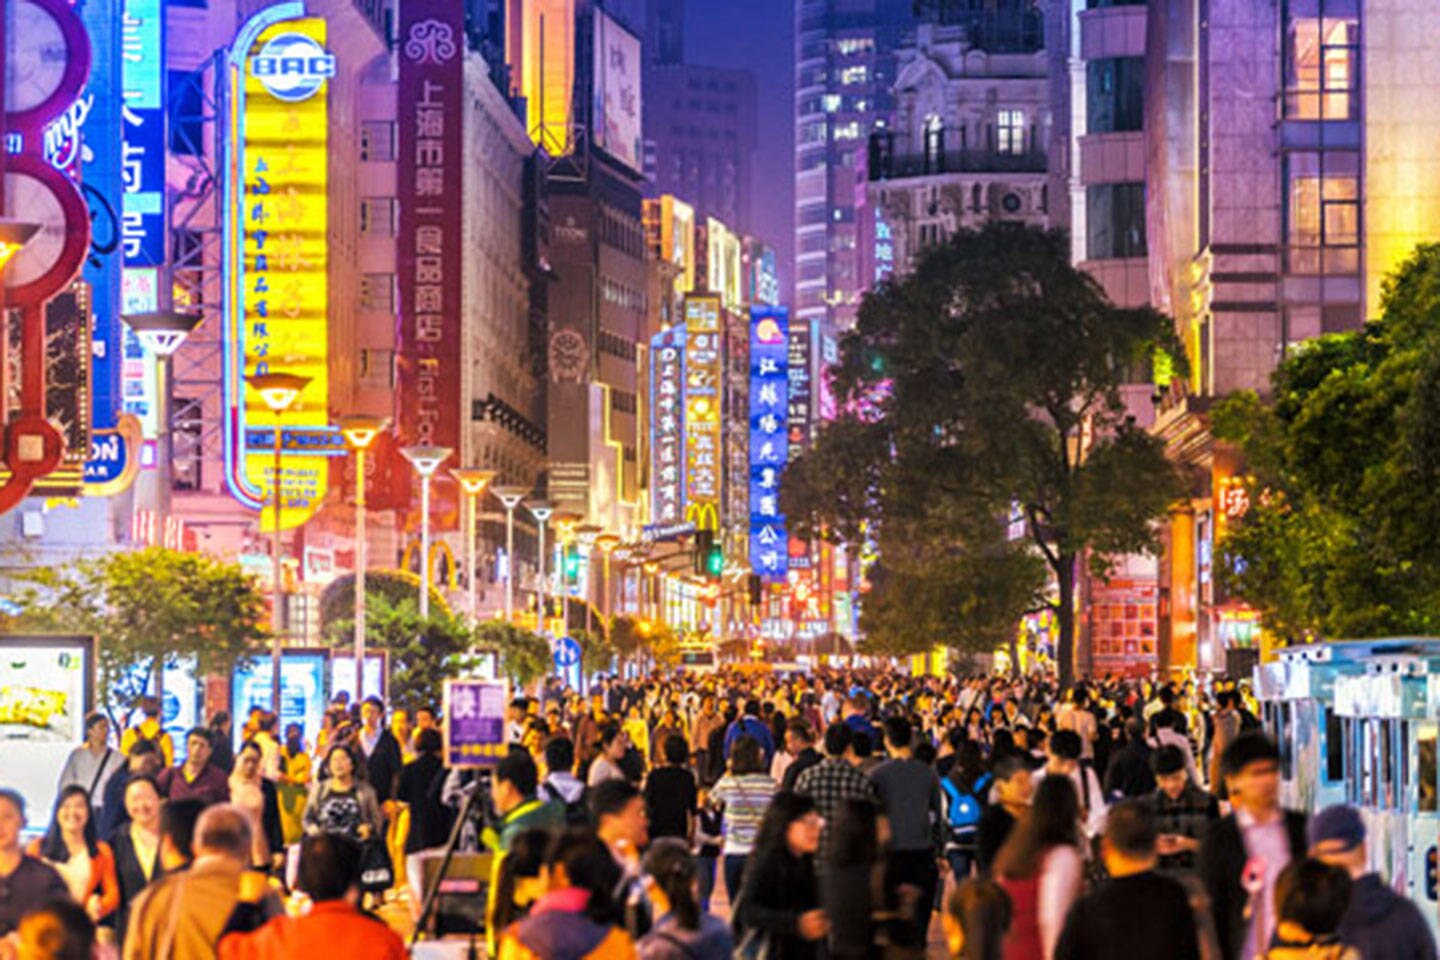 Shopping crowds on nighttime street in Shanghai